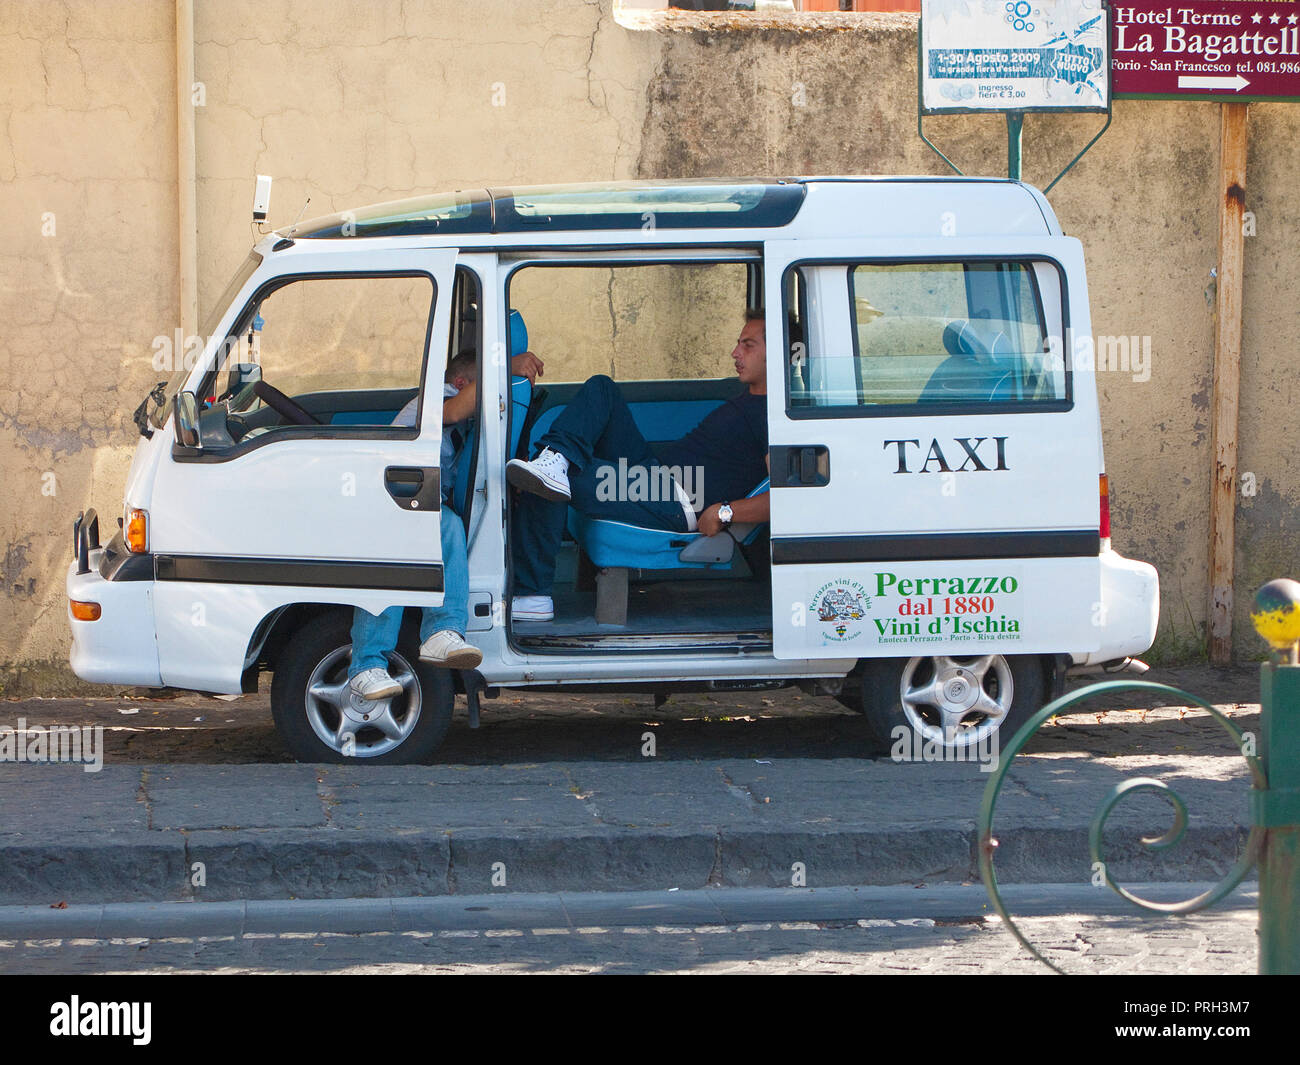 Taxi driver en una furgoneta esperando a clientes, ISCHIA, isla Ischia Ponte, Golfo de Neapel, Italia Foto de stock